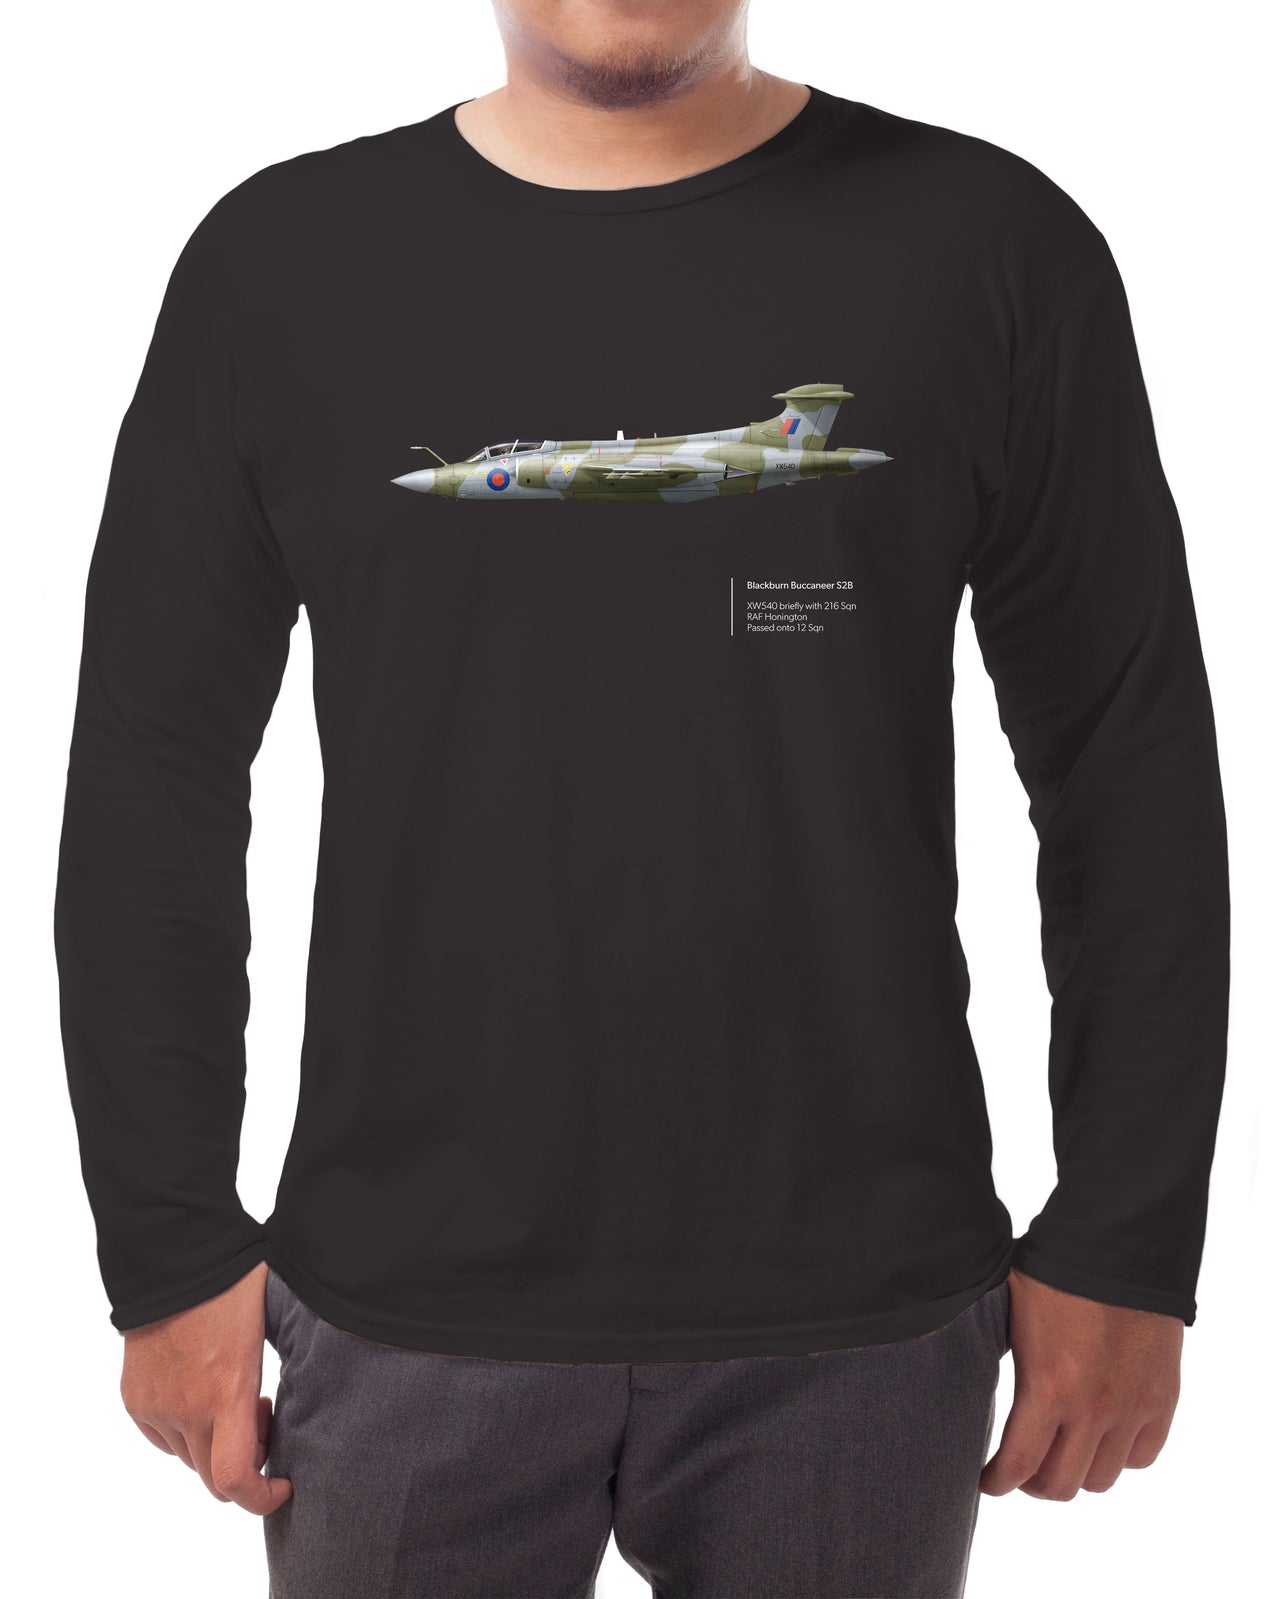 Buccaneer 216SQN - Long-sleeve T-shirt